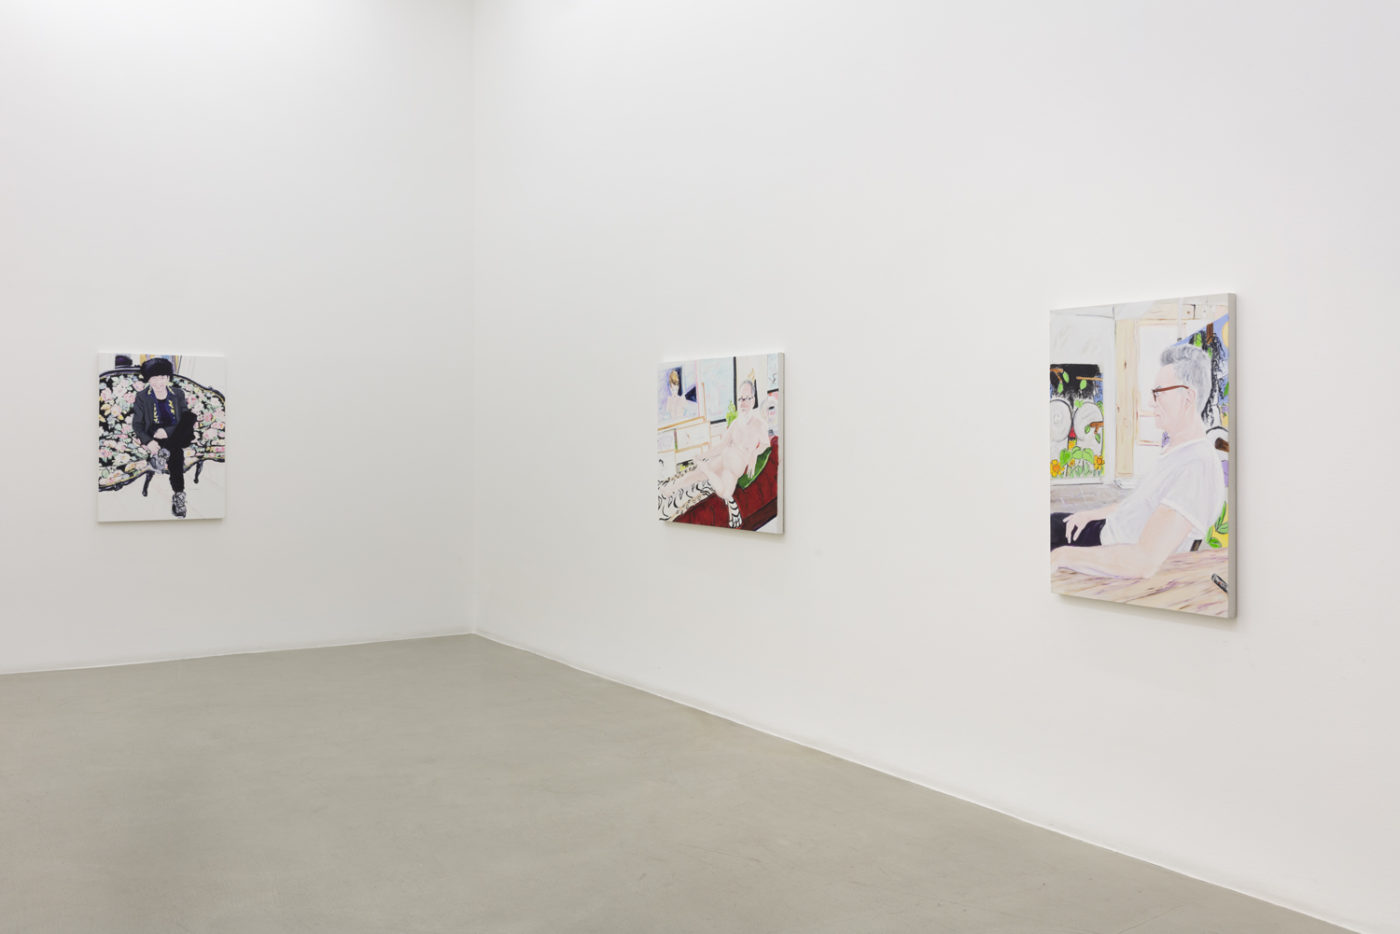 Billy Sullivan, Muses, installation view, kaufmann repetto, Milano, 2019